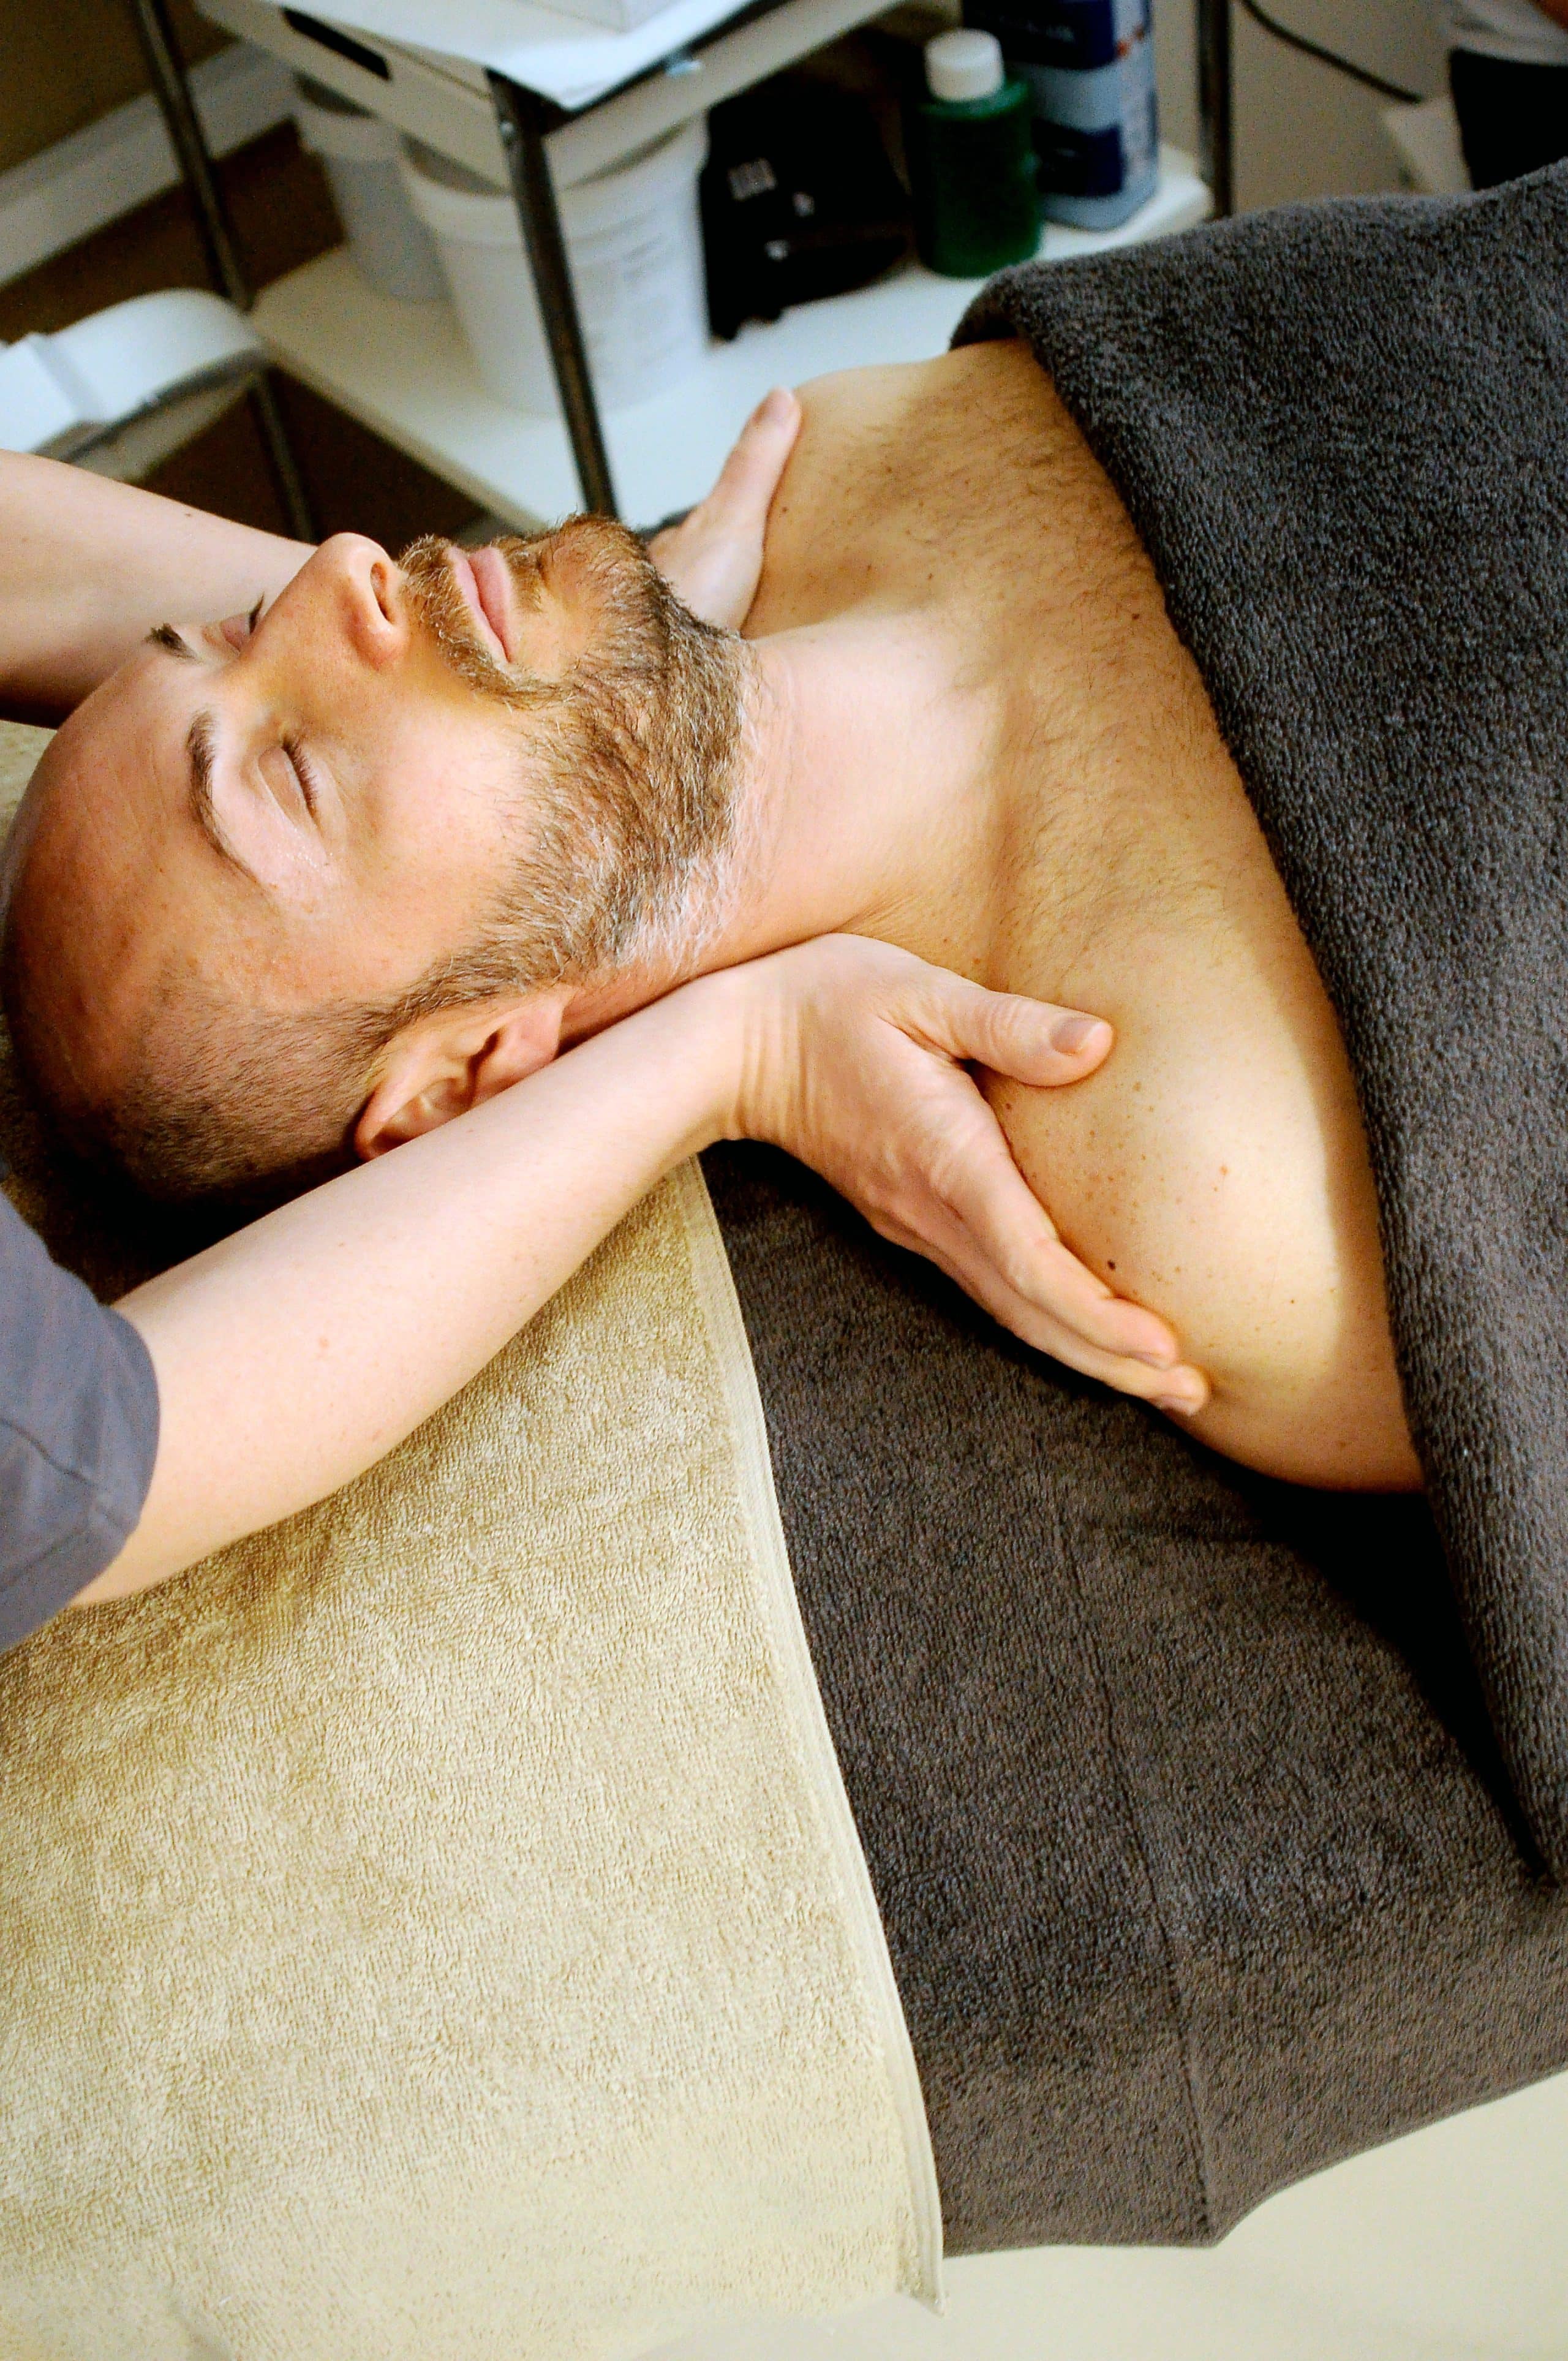 Hot Stone Massage Therapy in Longview WA